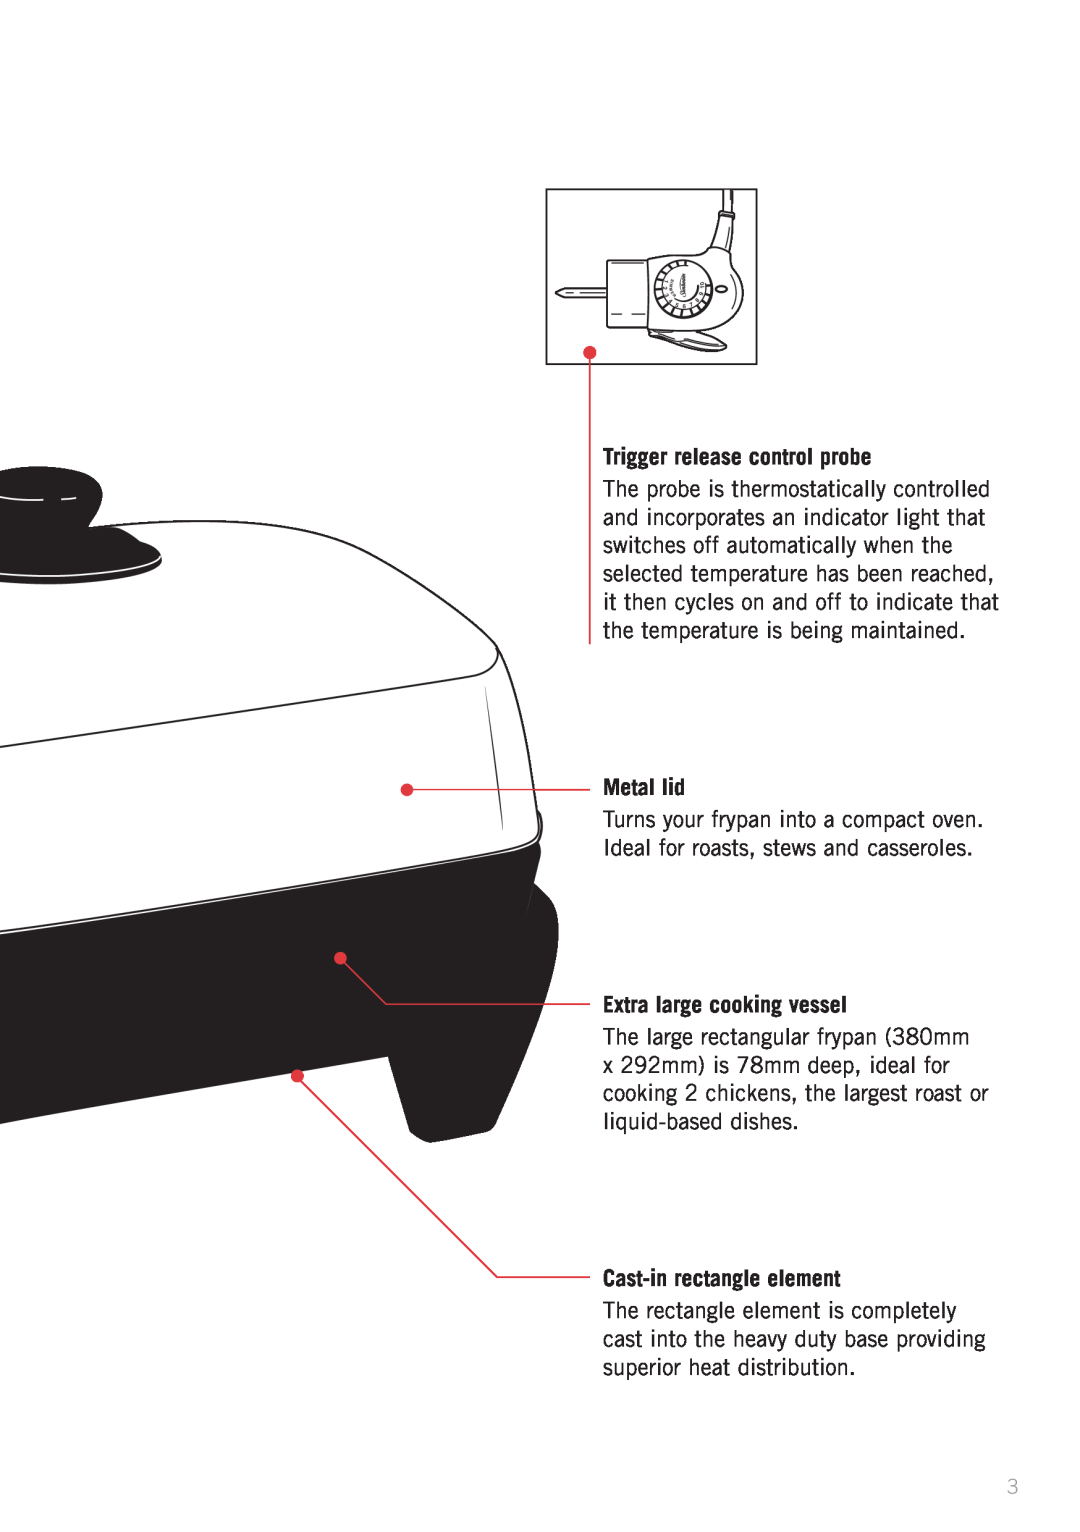 Sunbeam PU5300 manual Trigger release control probe, Metal lid, Extra large cooking vessel, Cast-inrectangle element 